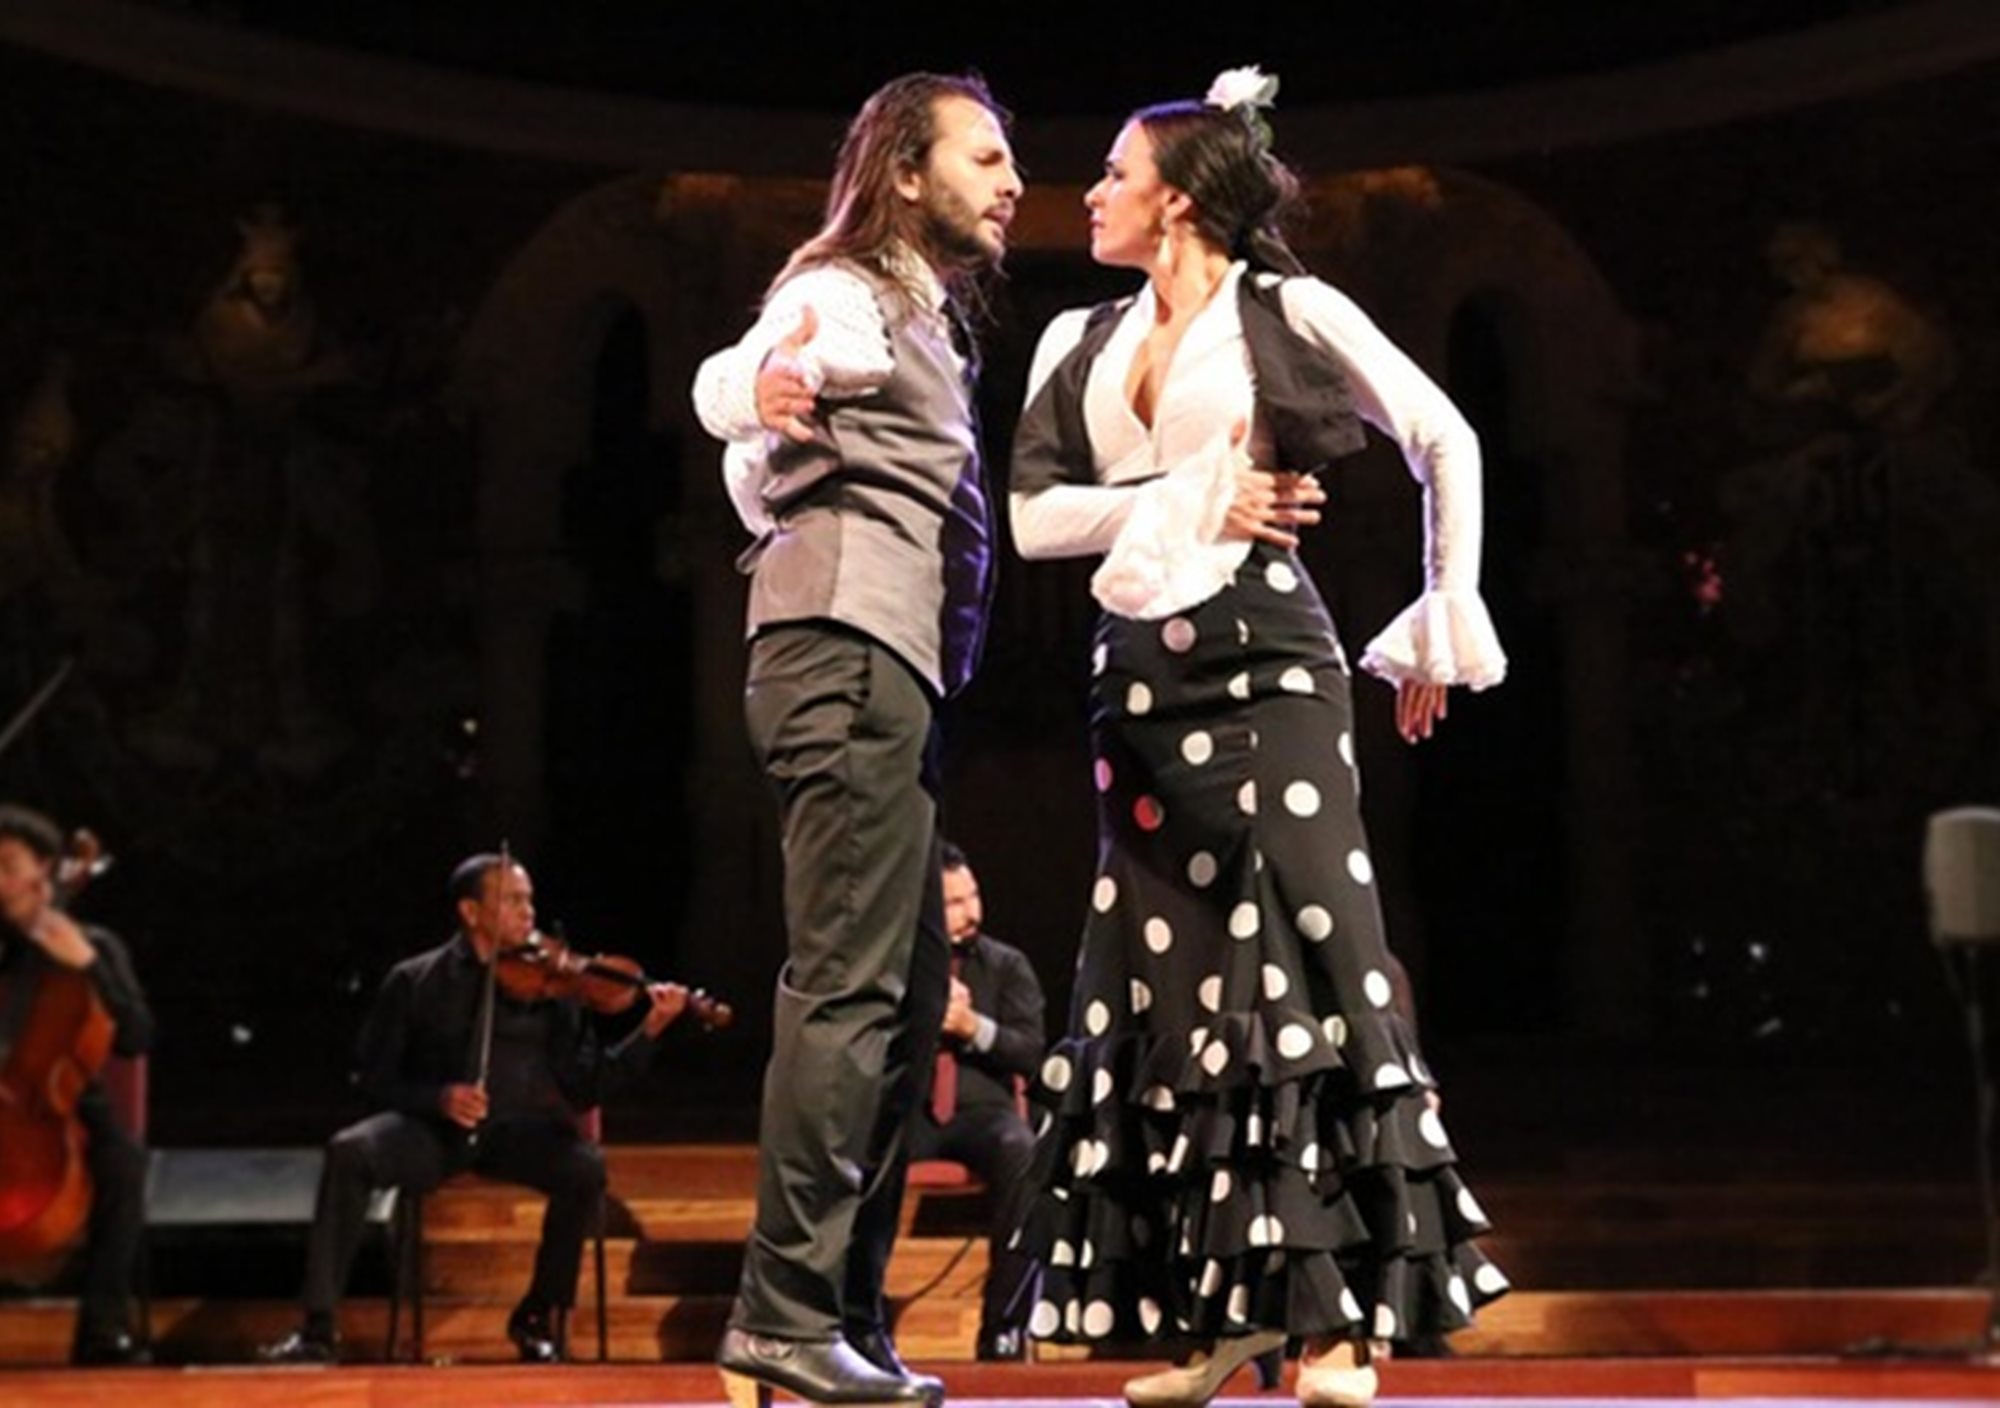 Opéra et Flamenco dans le Teatre Poliorama barcelone billets reservation acheter réserver en ligne online